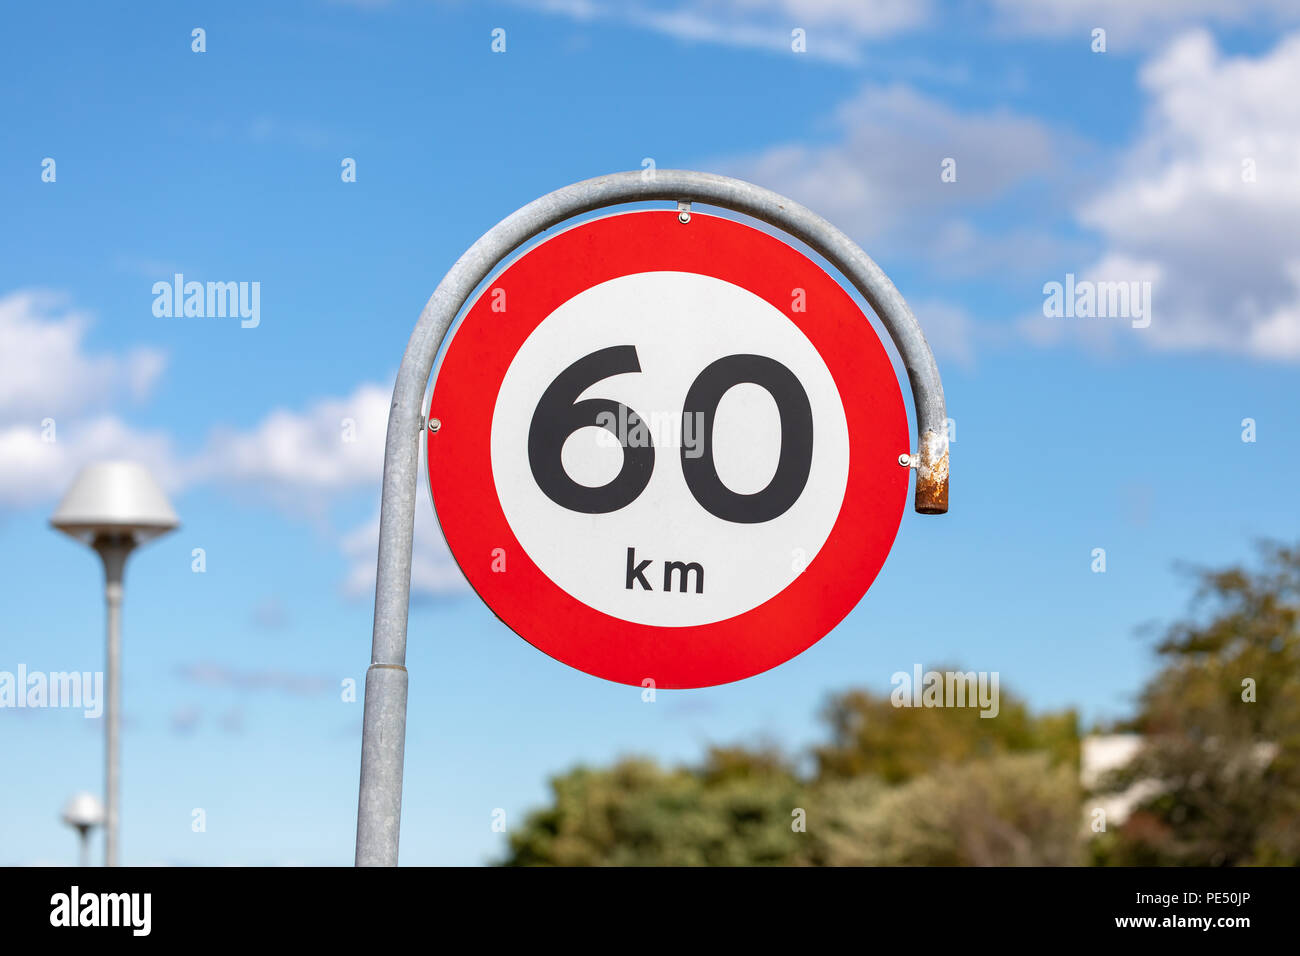 '60 km', speed limit sign, Denmark Stock Photo